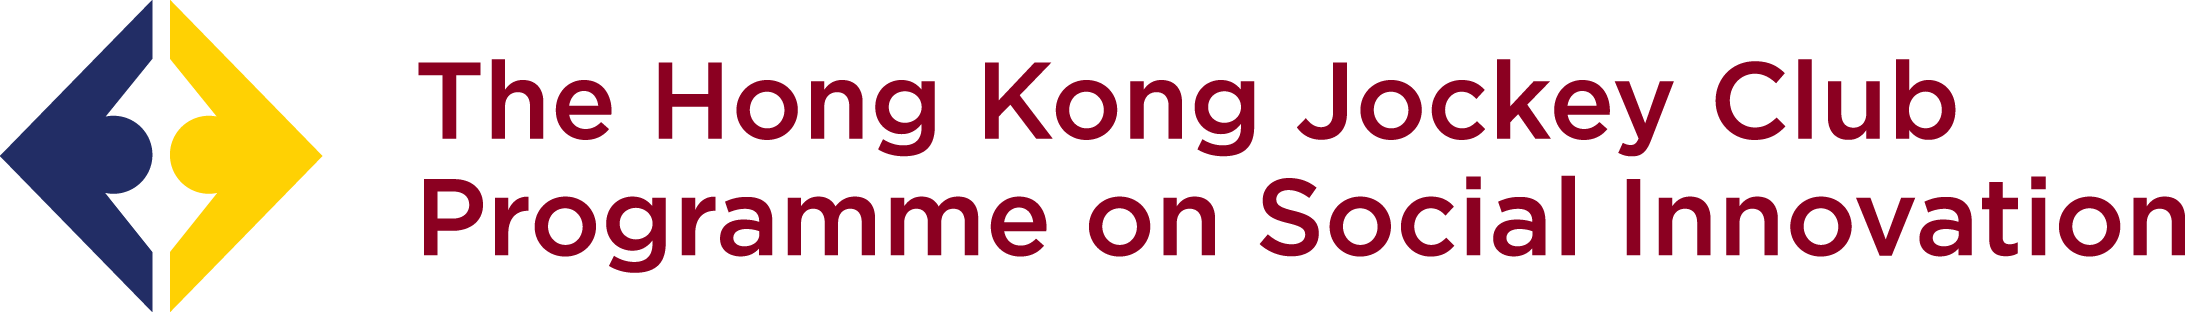 Logo for The Hong Kong Jockey Club Programme on Social Innovation